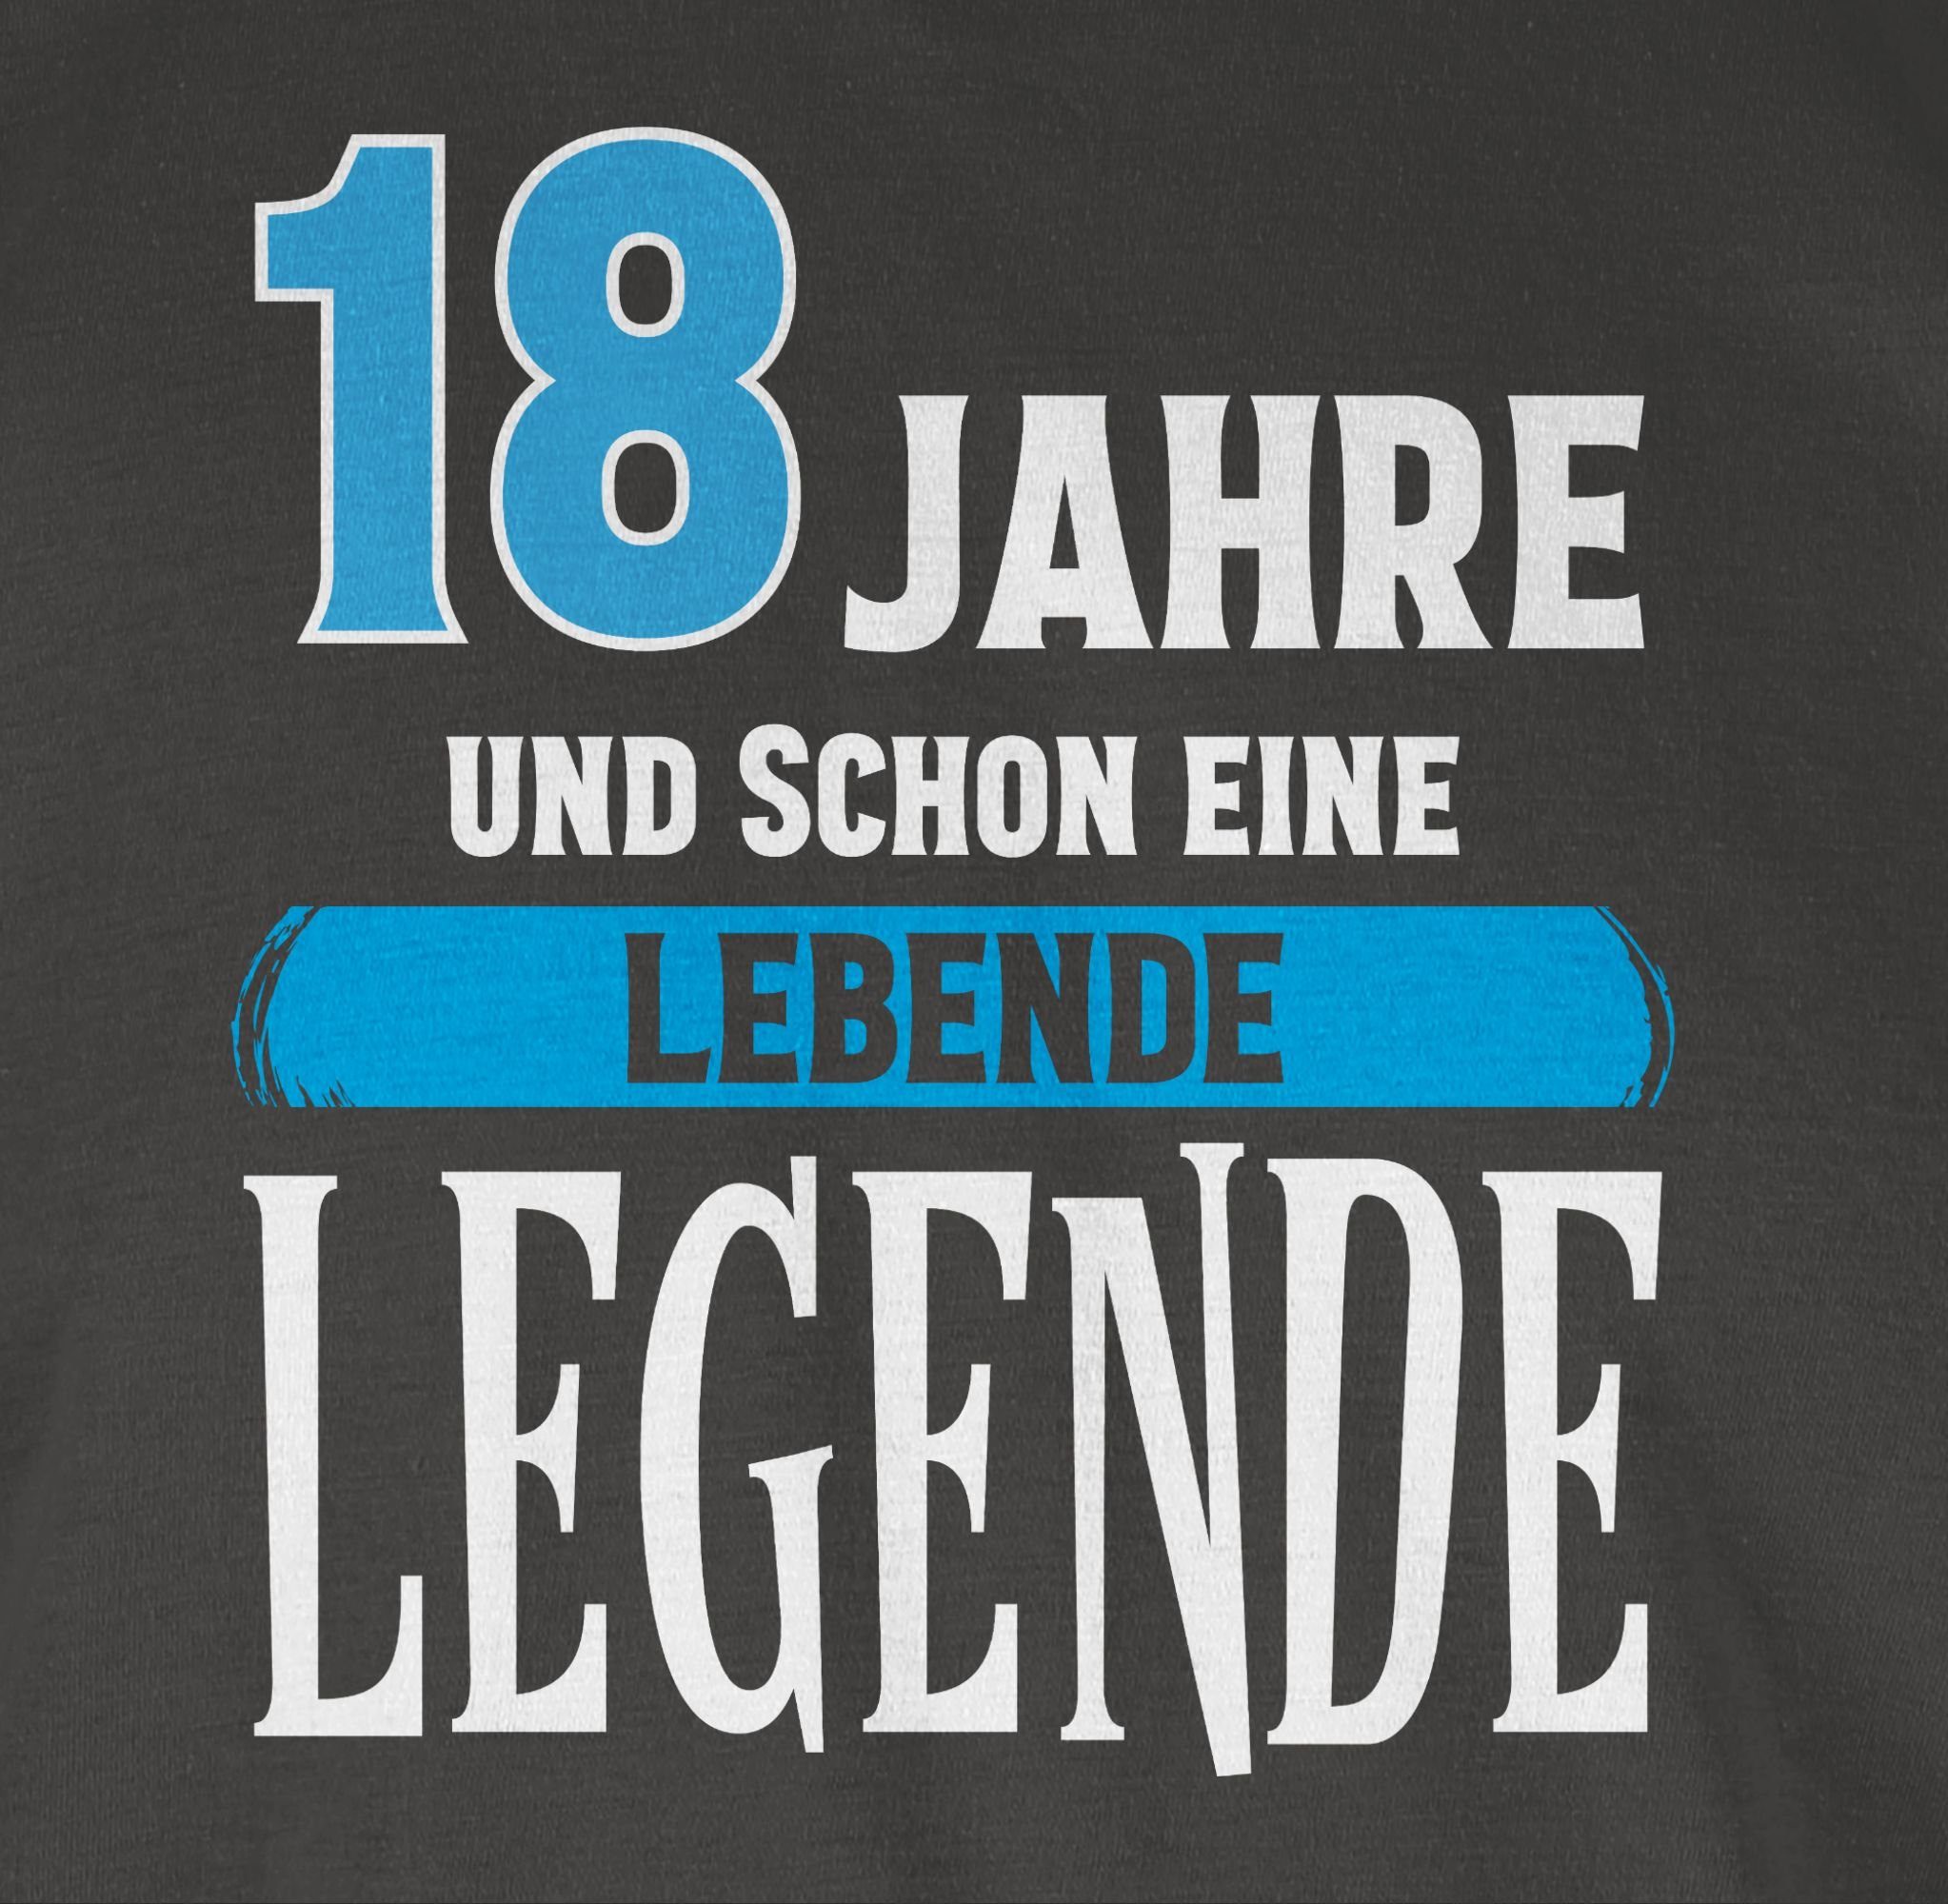 Dunkelgrau Legende Shirtracer Achtzehnter 3 Geburtstag T-Shirt 18.